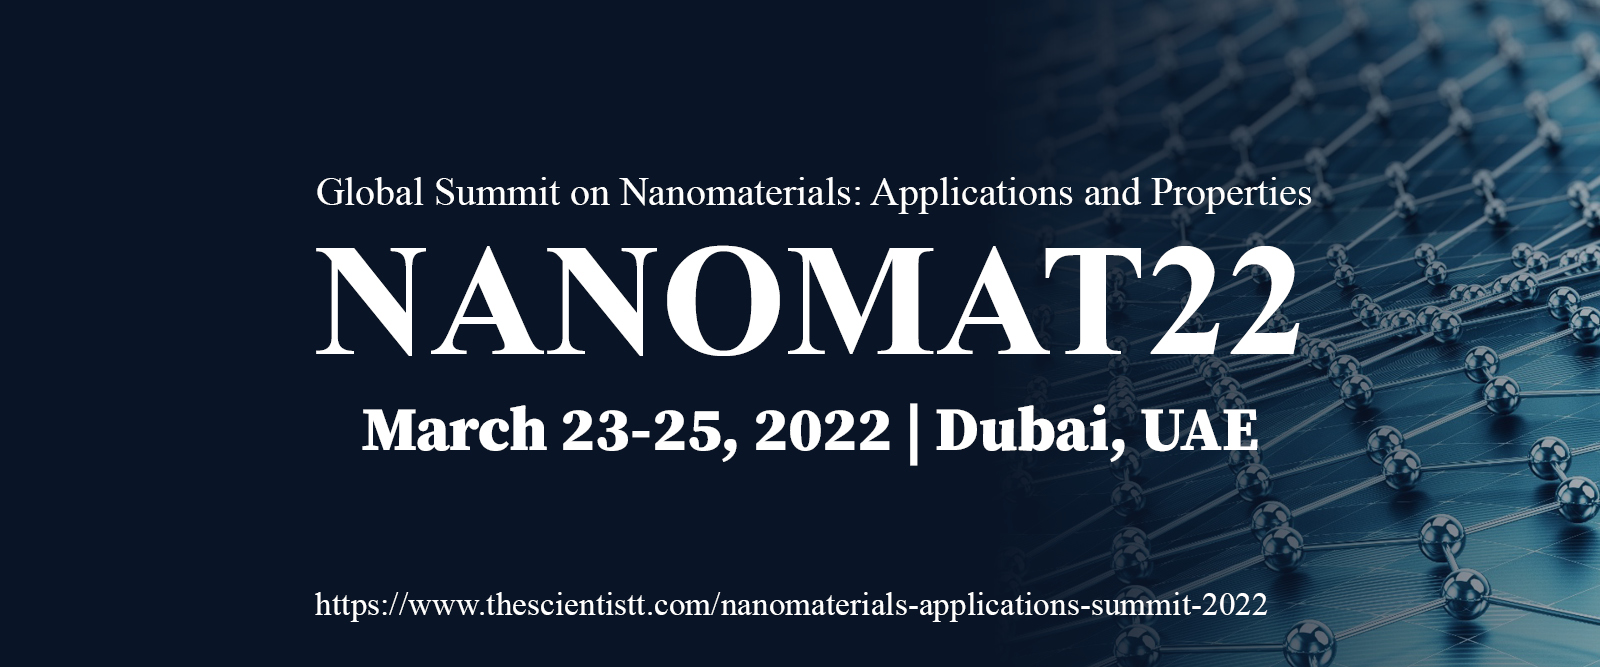 Global Summit on Nanomaterials: Applications and Properties (NANOMAT22), Deira, Dubai, UAE,Dubai,United Arab Emirates